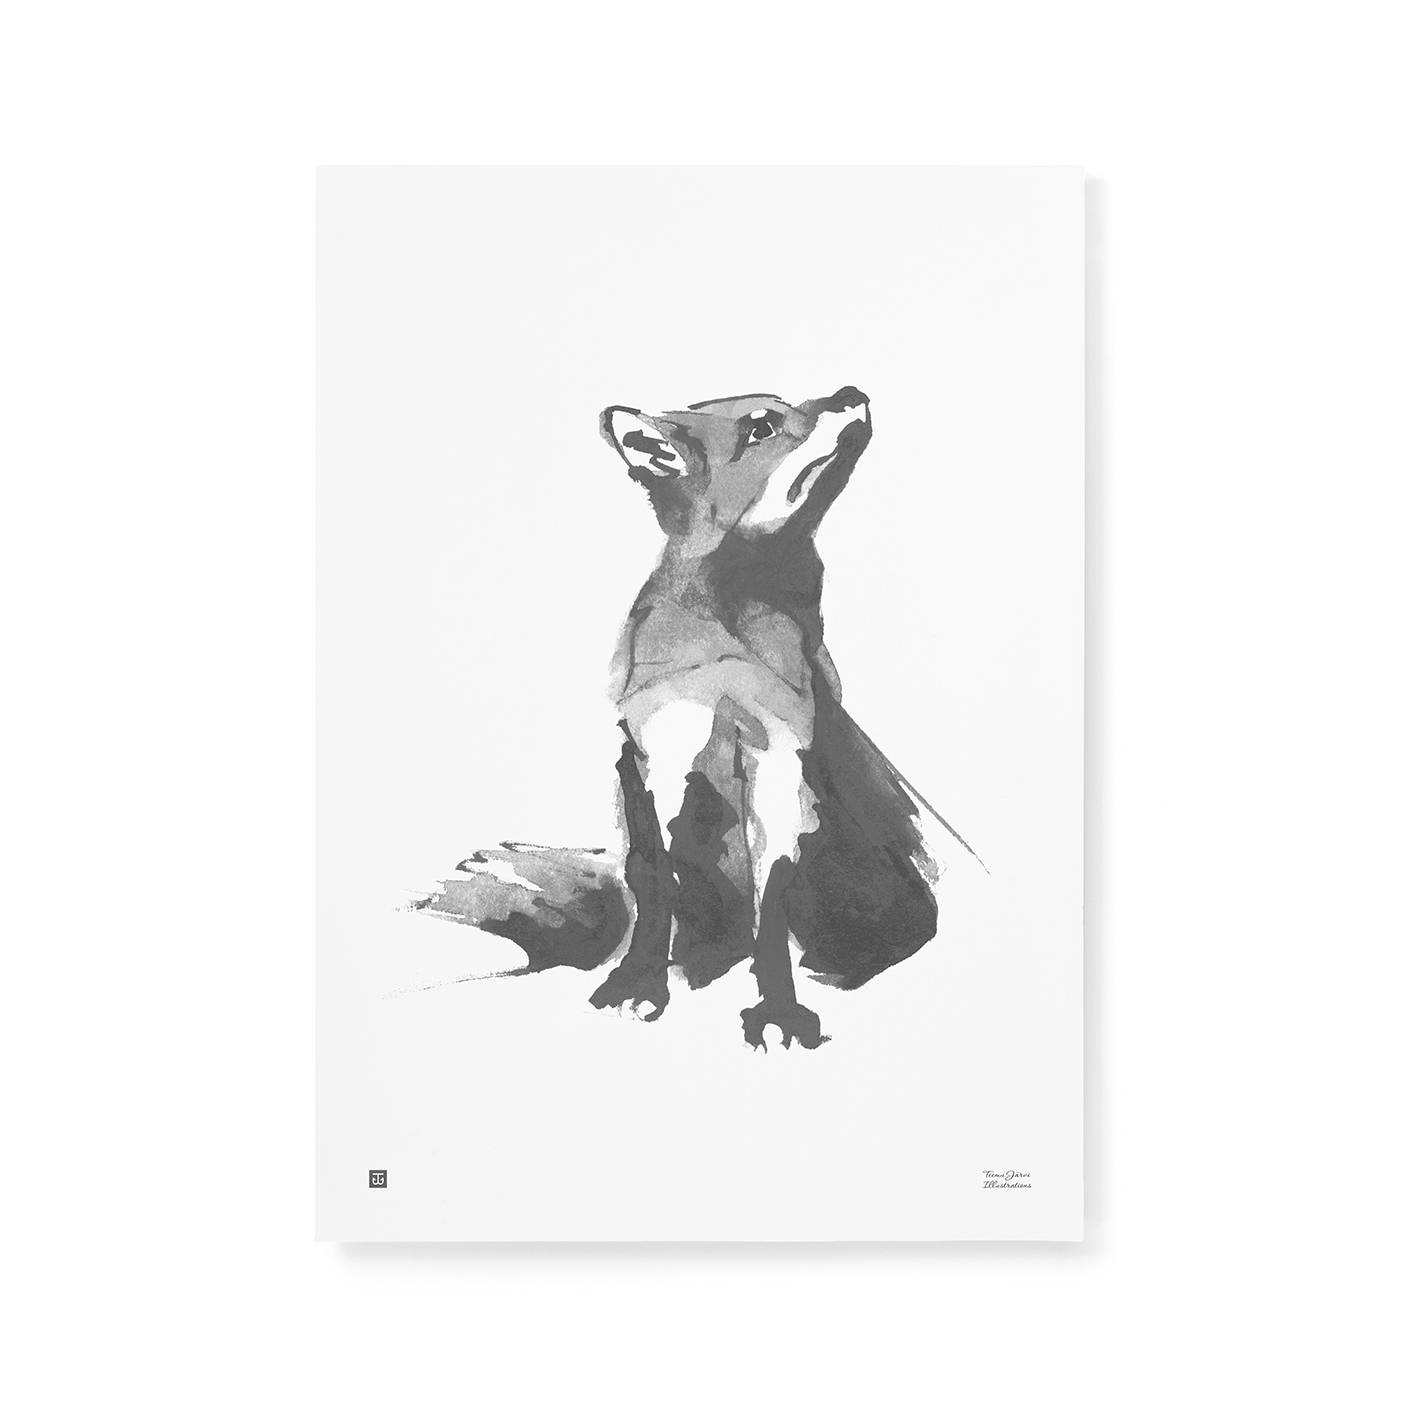 Fox art print